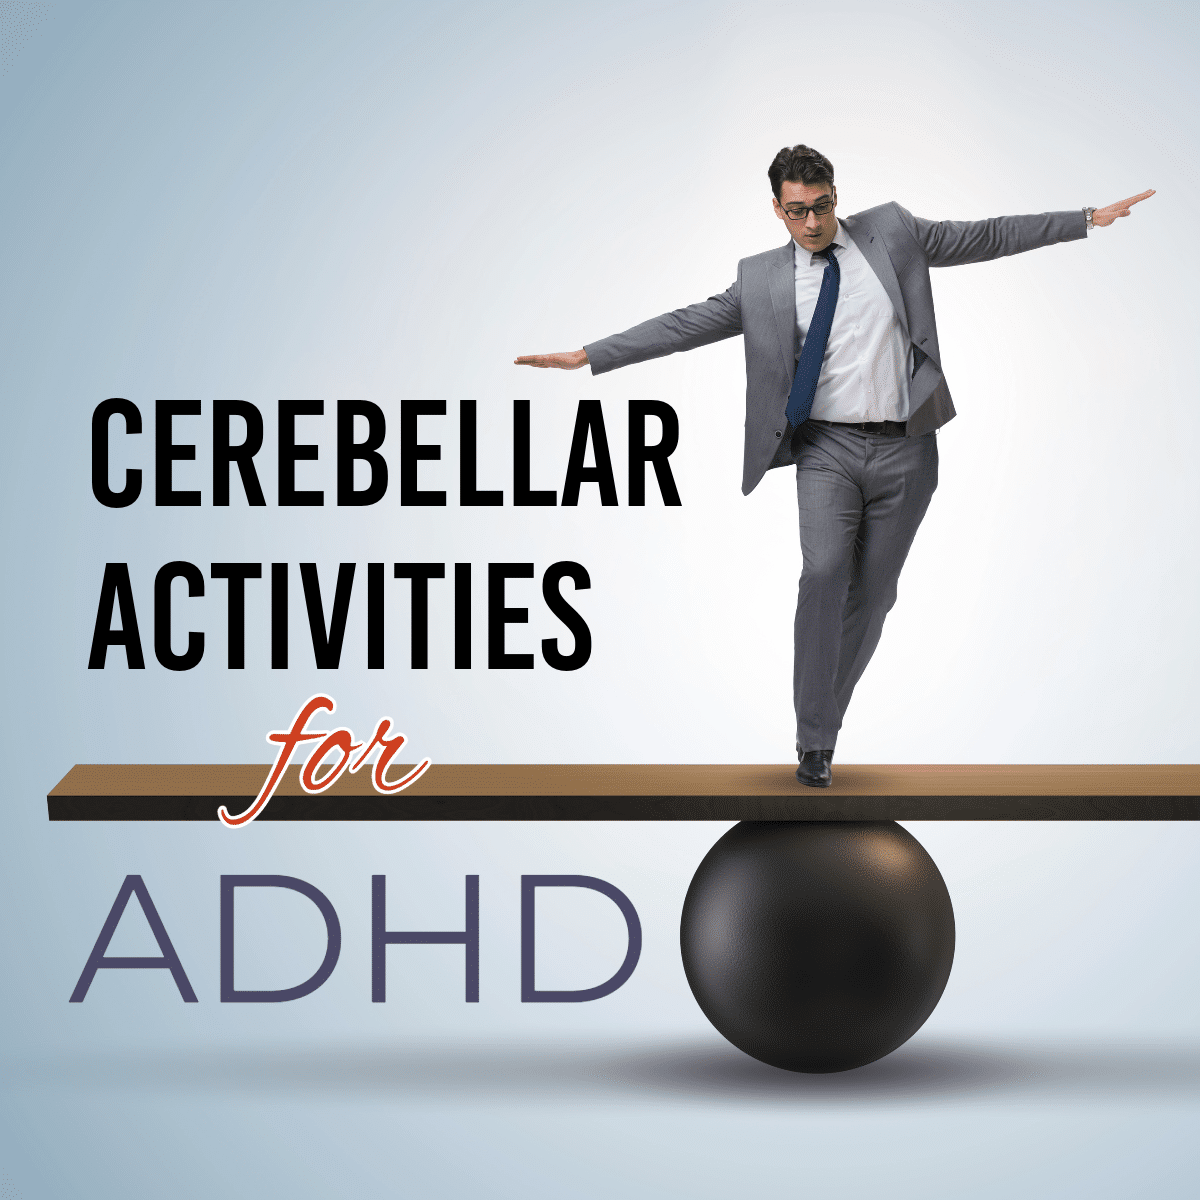 Cerebellar Exercises in Training for ADHD